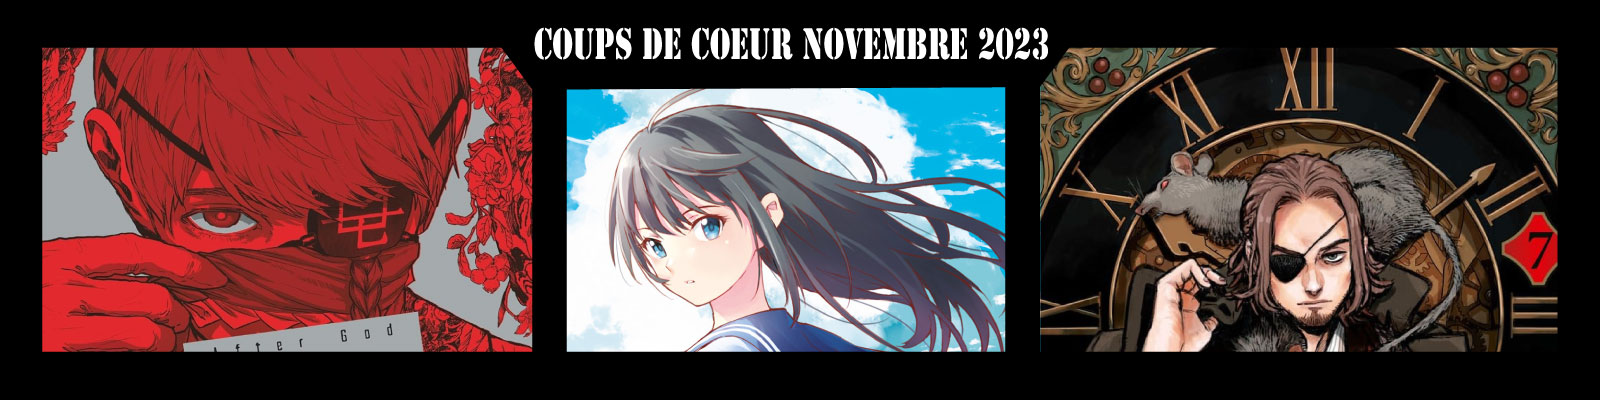 Coups-de-coeur-novembre 2023--2